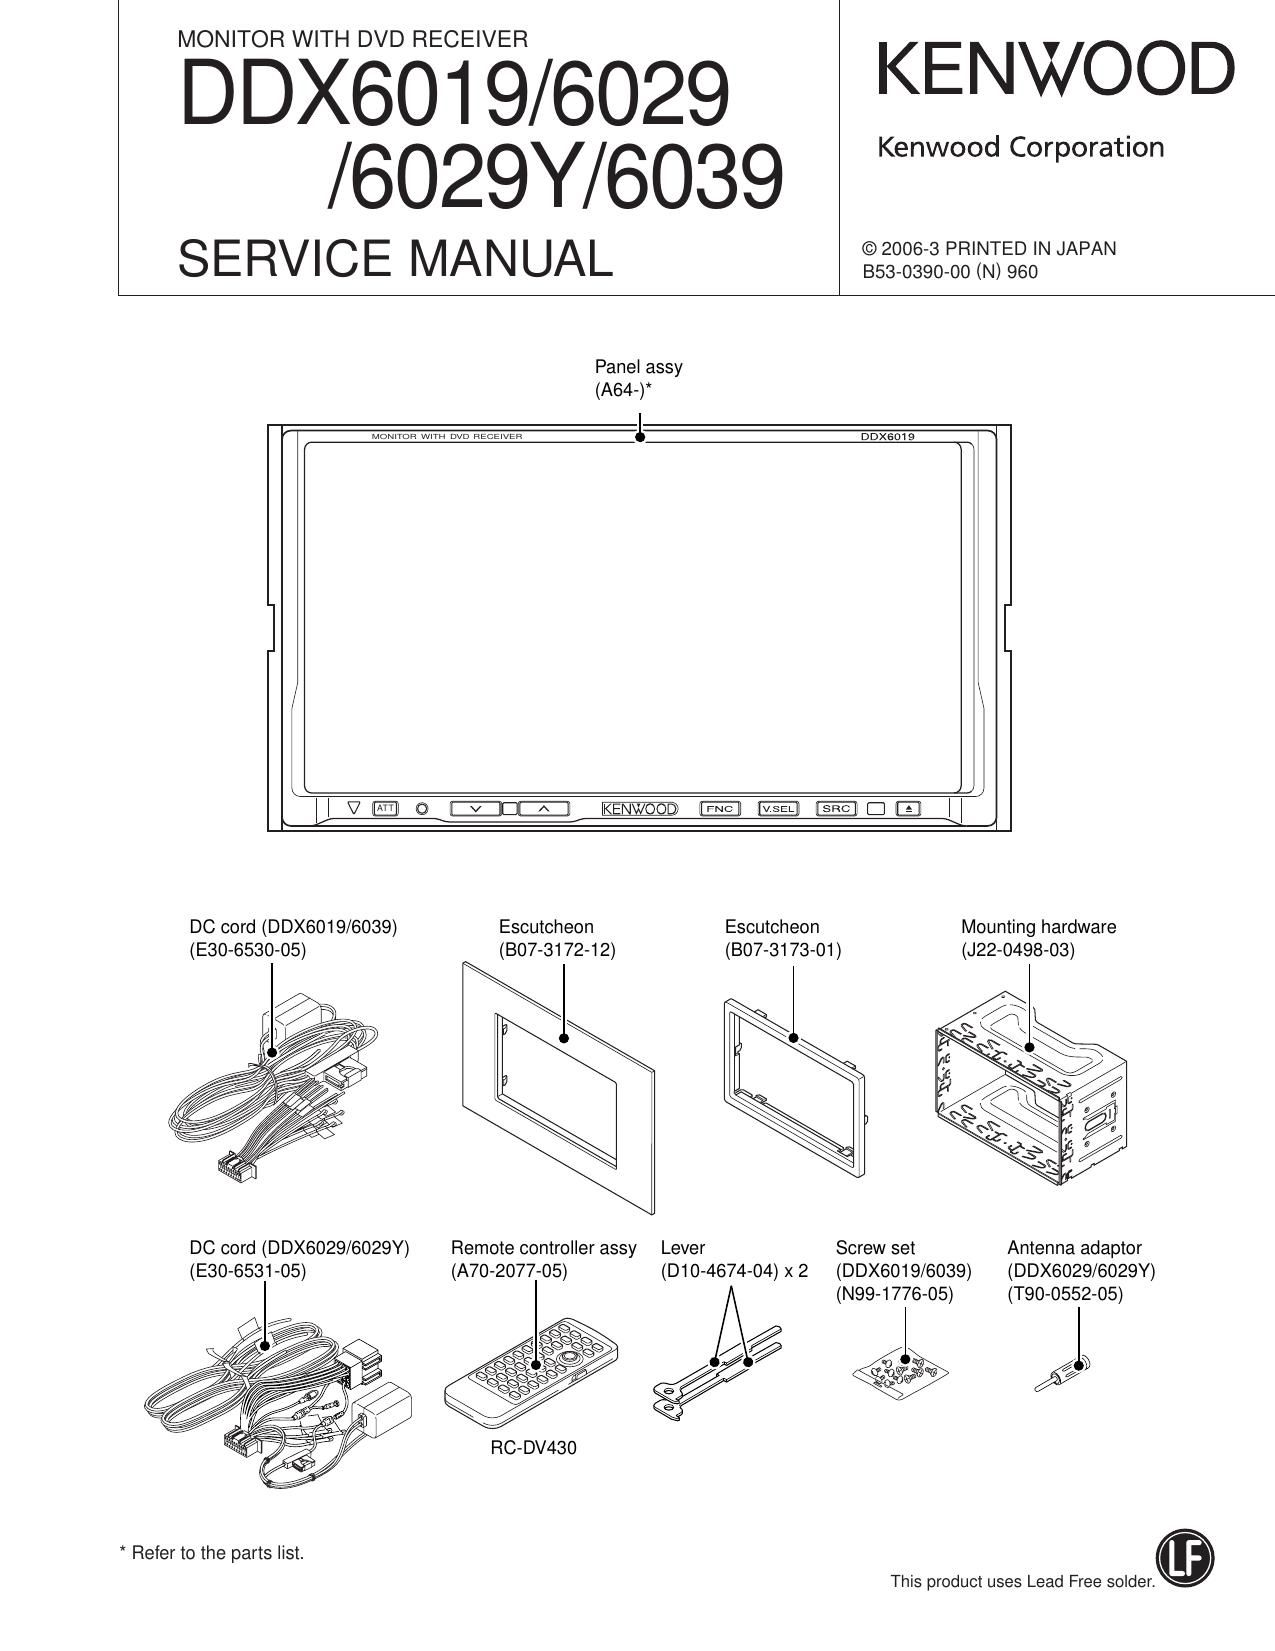 Kenwood DDX 6029 HU Service Manual